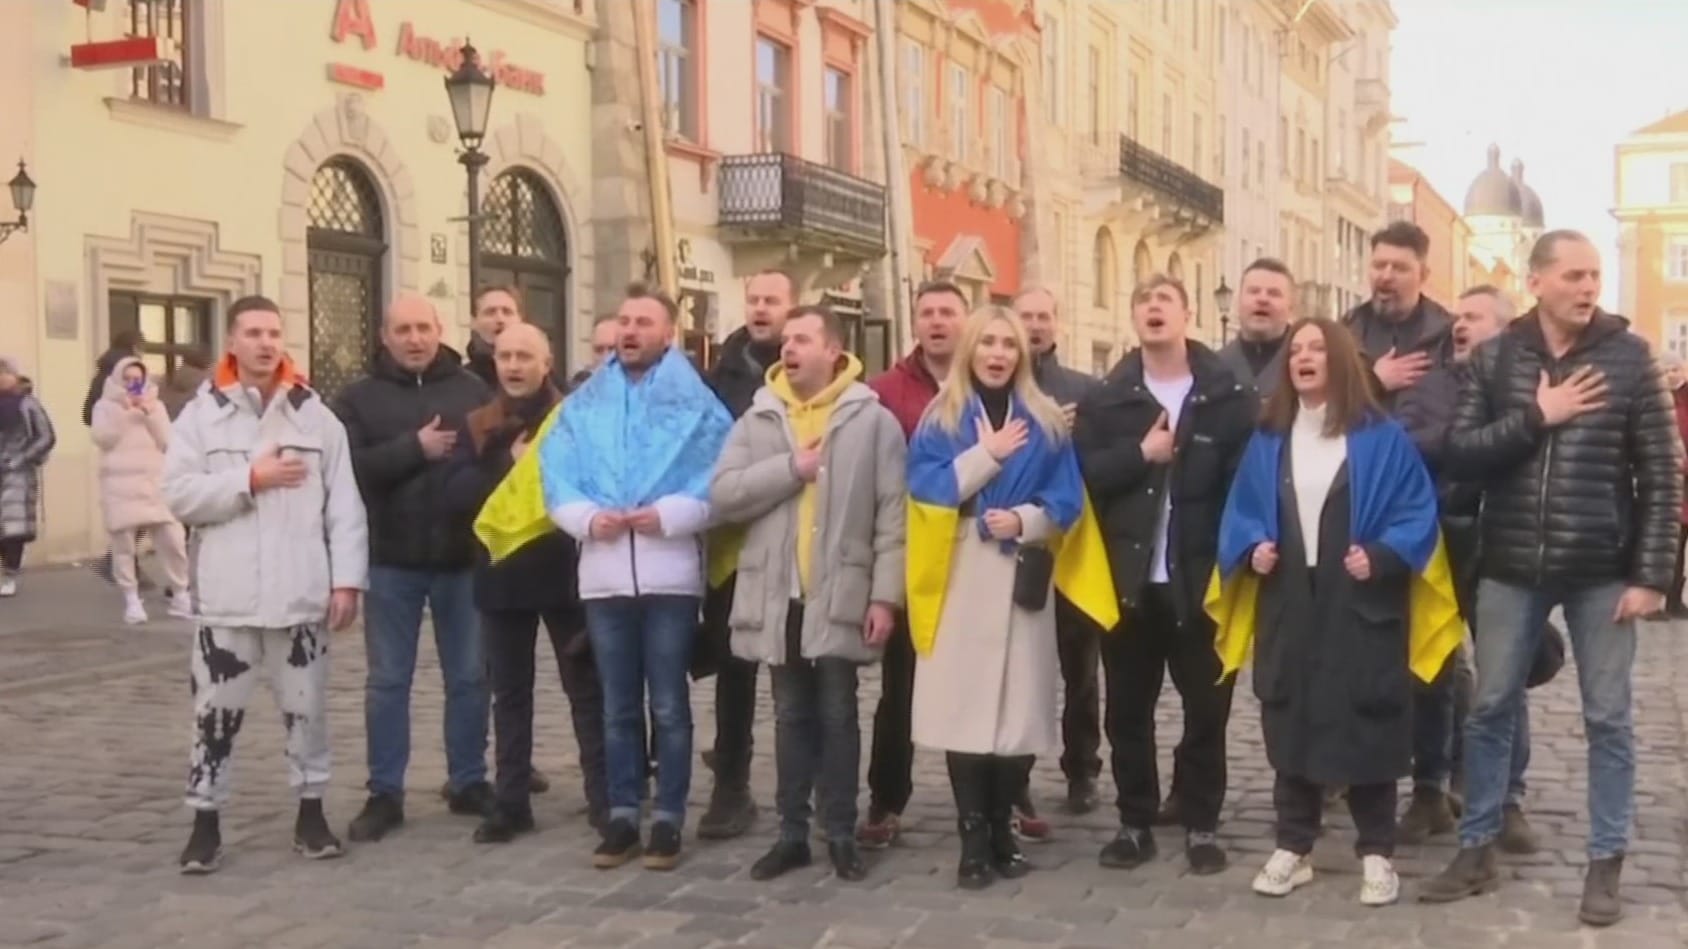 cantantes de opera entonan himno nacional ucraniano